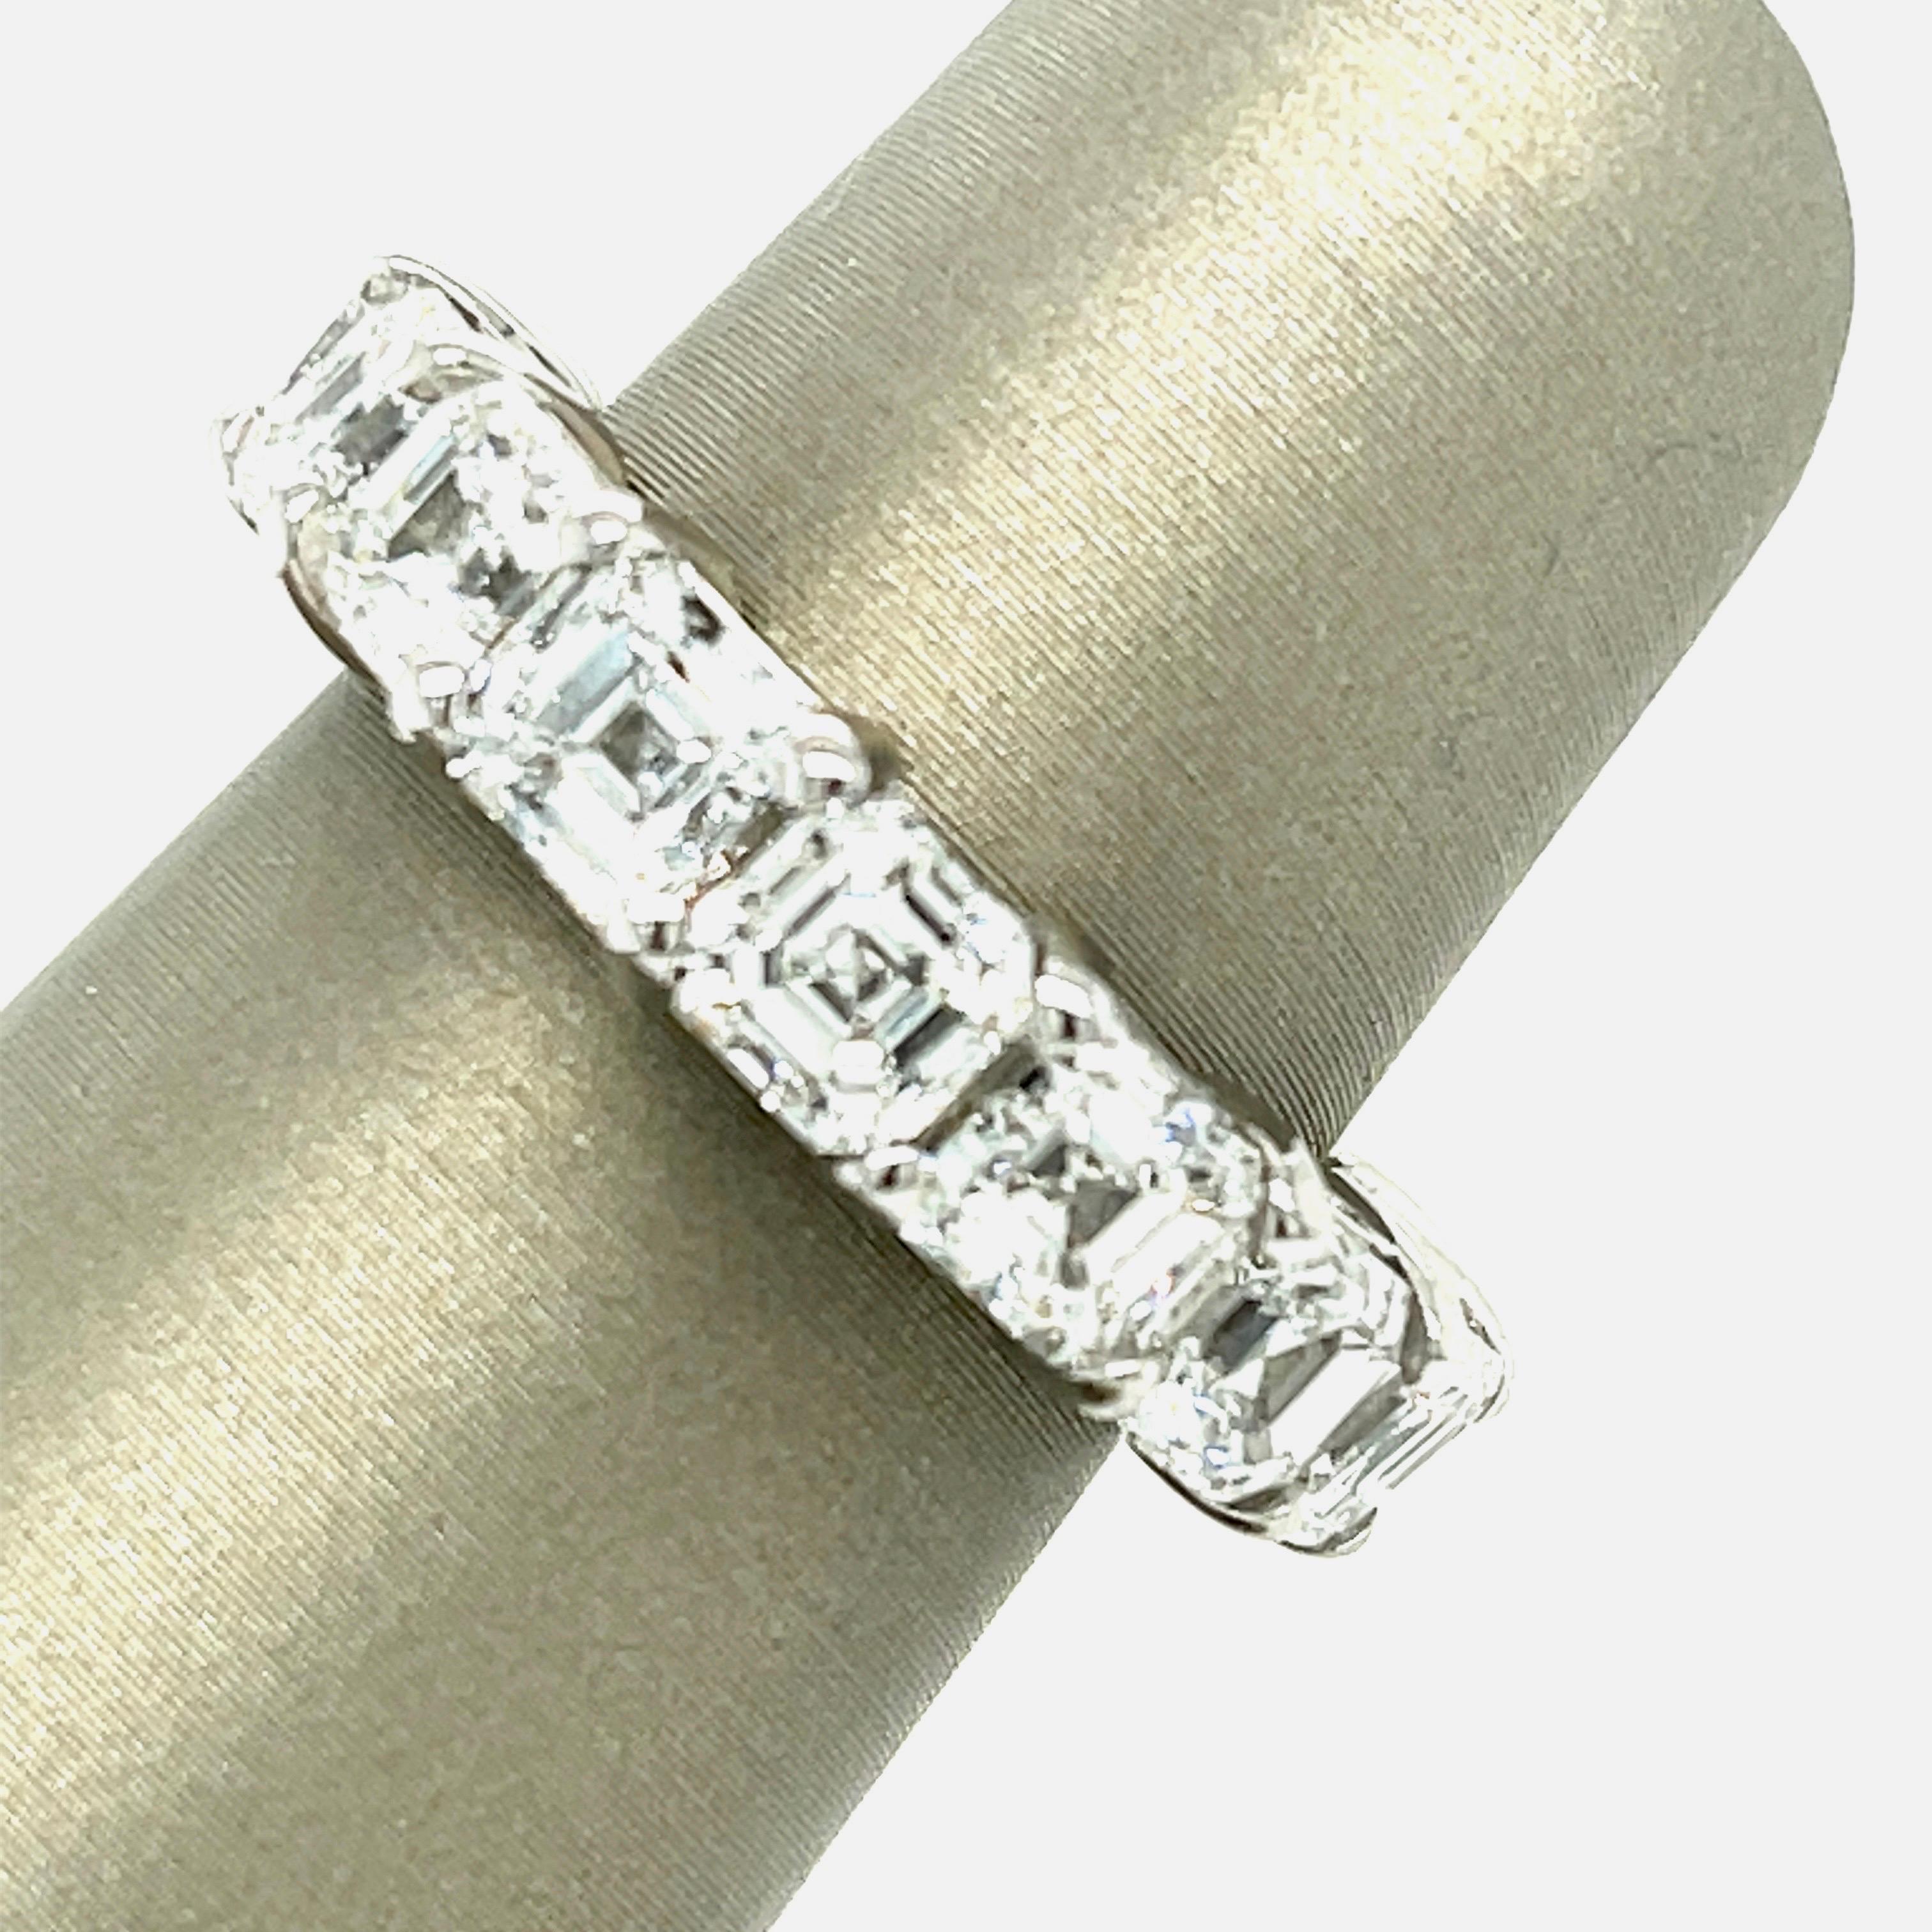 Romantic Anniversary Band Has 15 Square Emerald Cut Diamonds 7..98 Ct .All Has GIA Certs For Sale